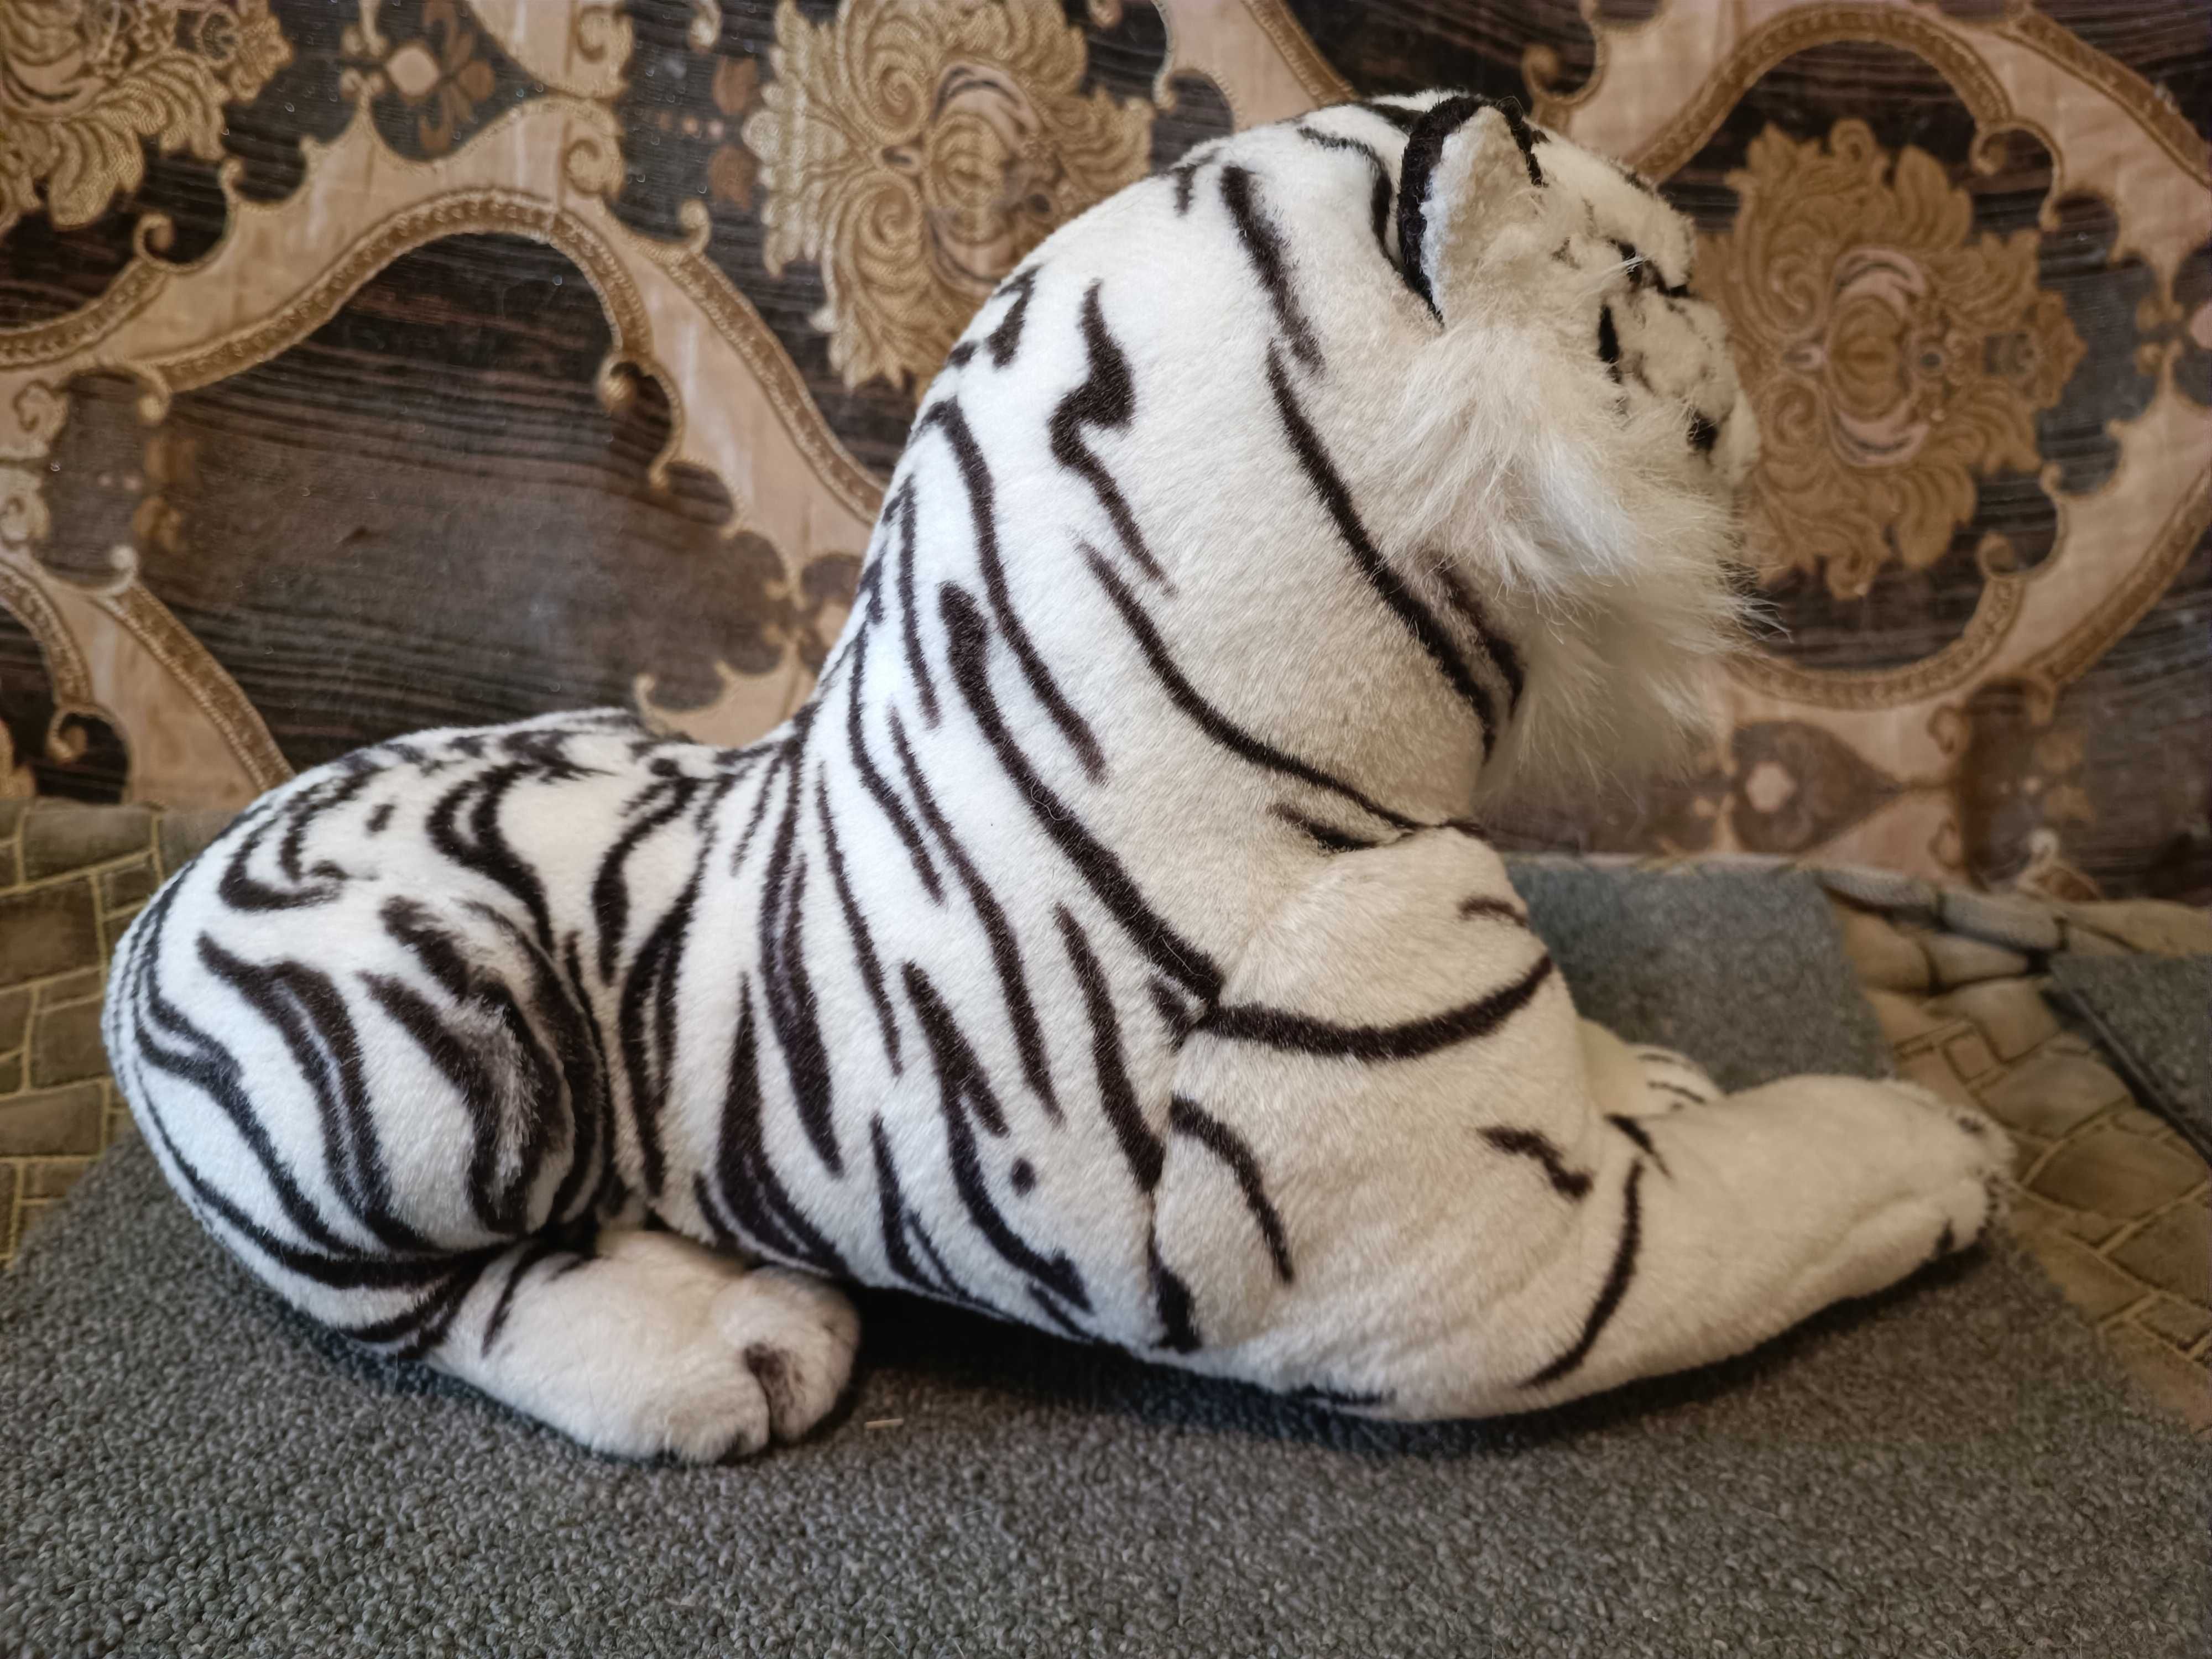 Мягкая игрушка Тигр